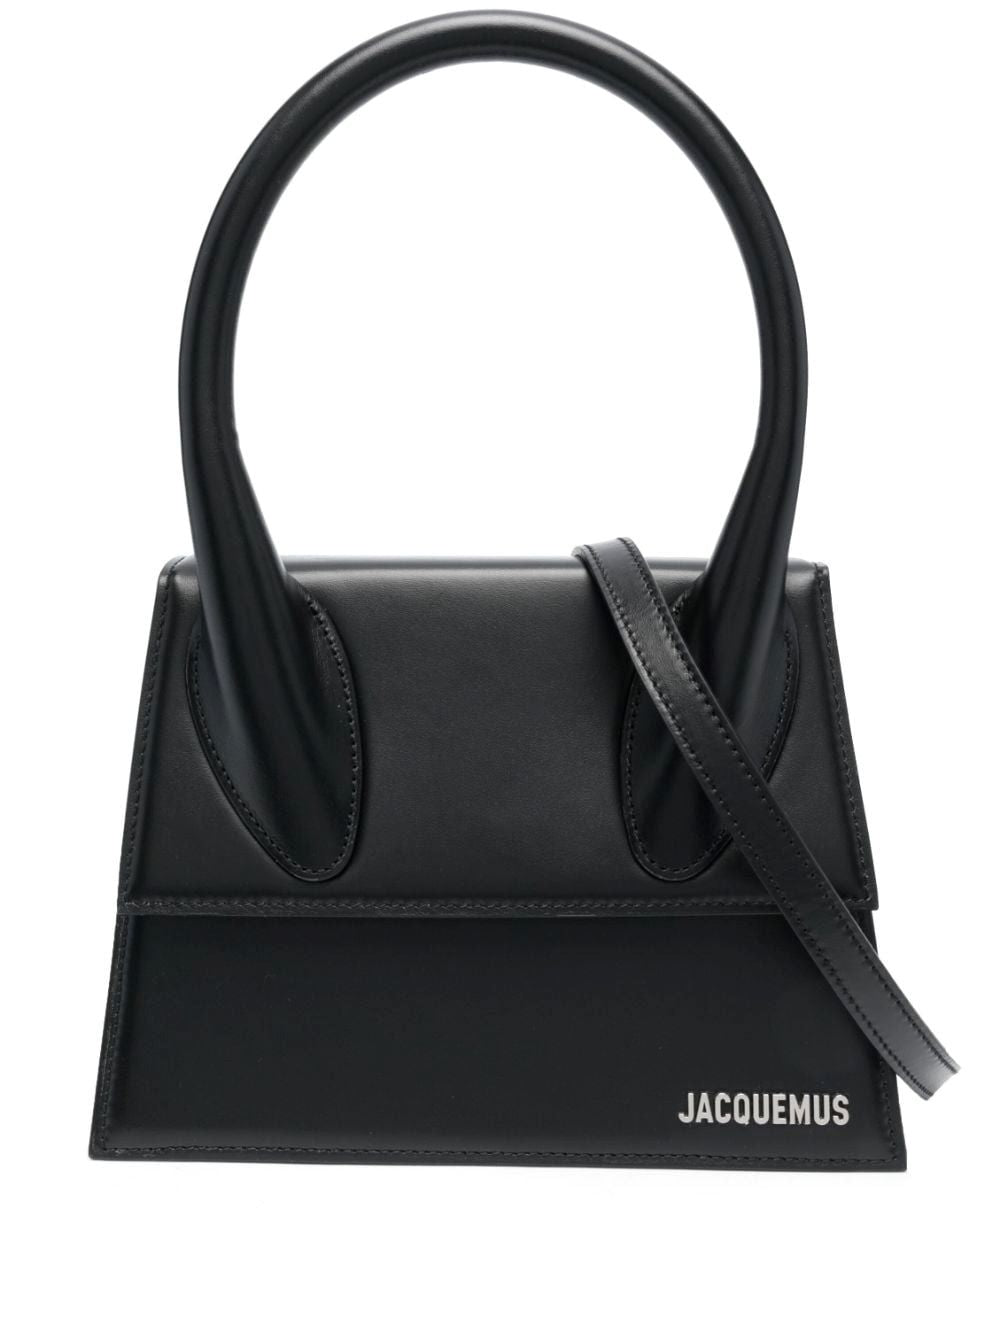 Jacquemus Le Grand Chiquito Bag